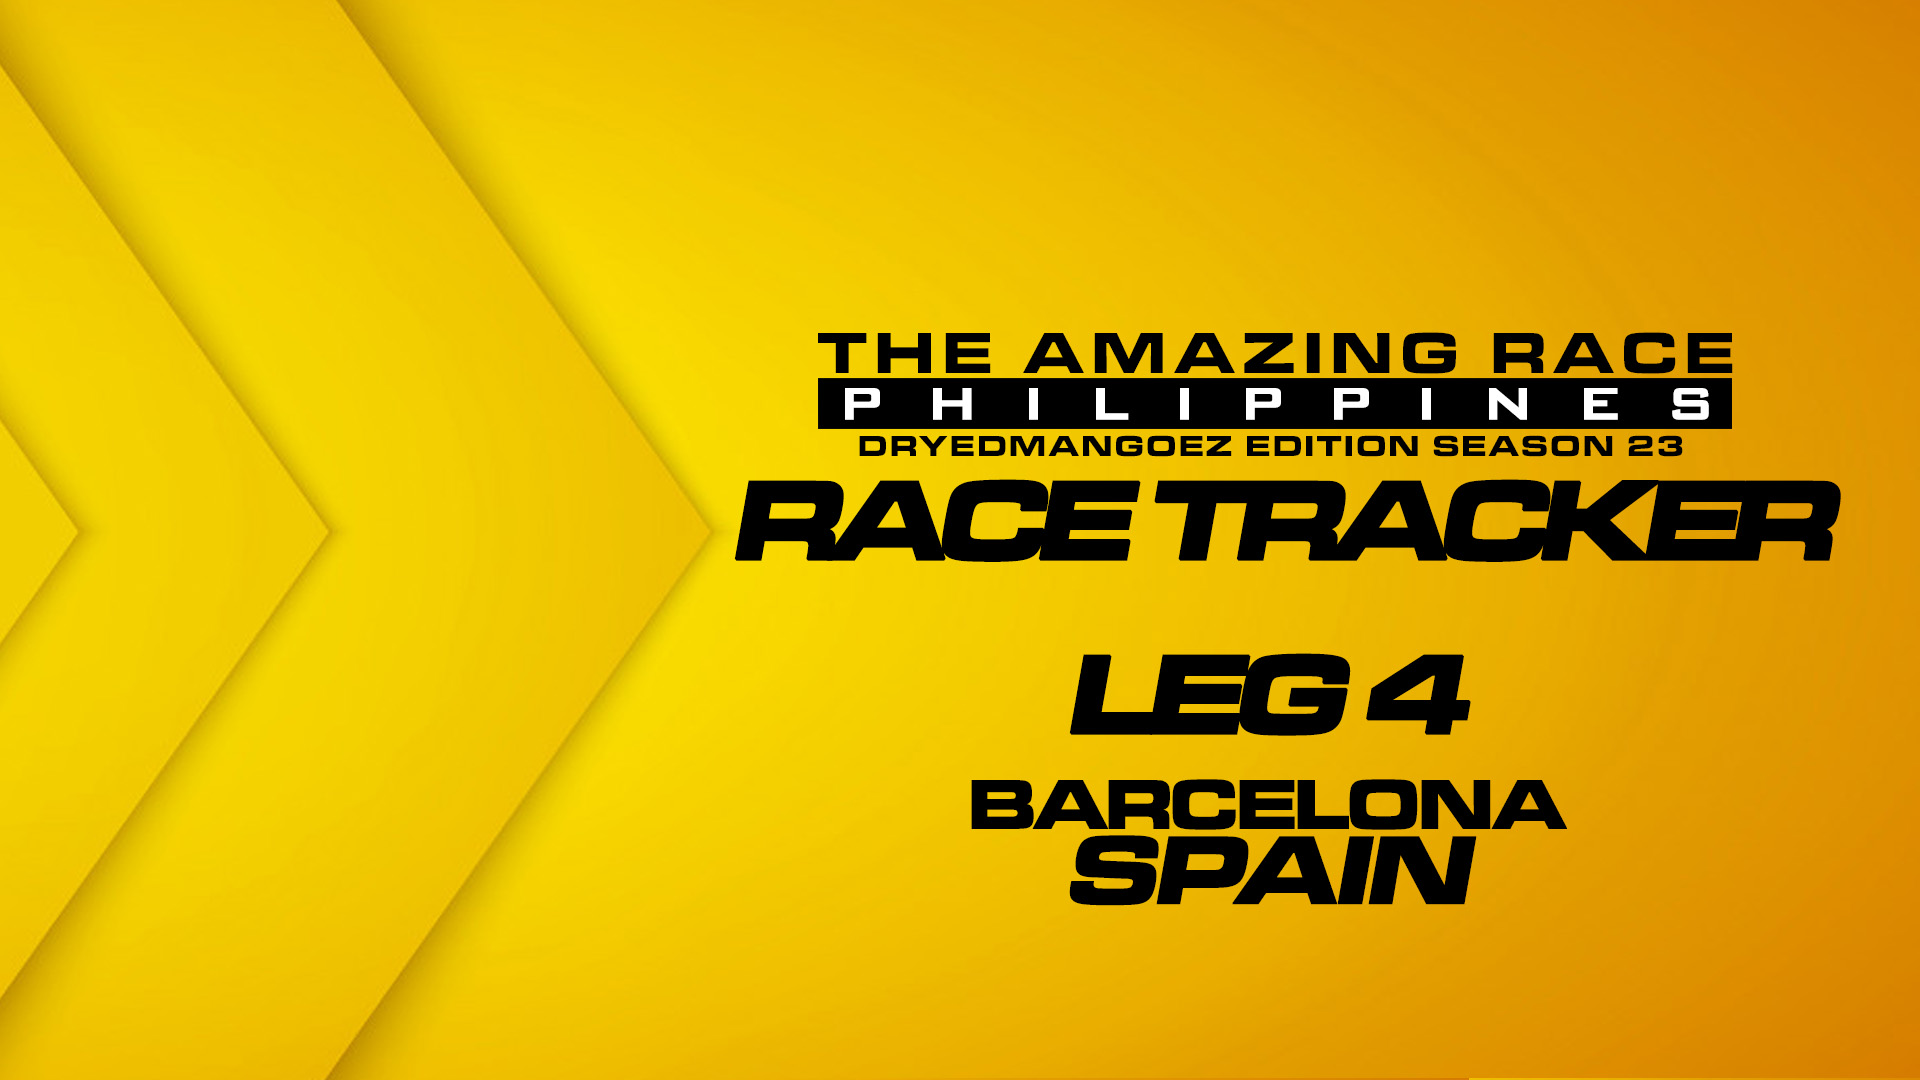 The Amazing Race Philippines: DryedMangoez Edition Season 23 Race Tracker – Leg 4